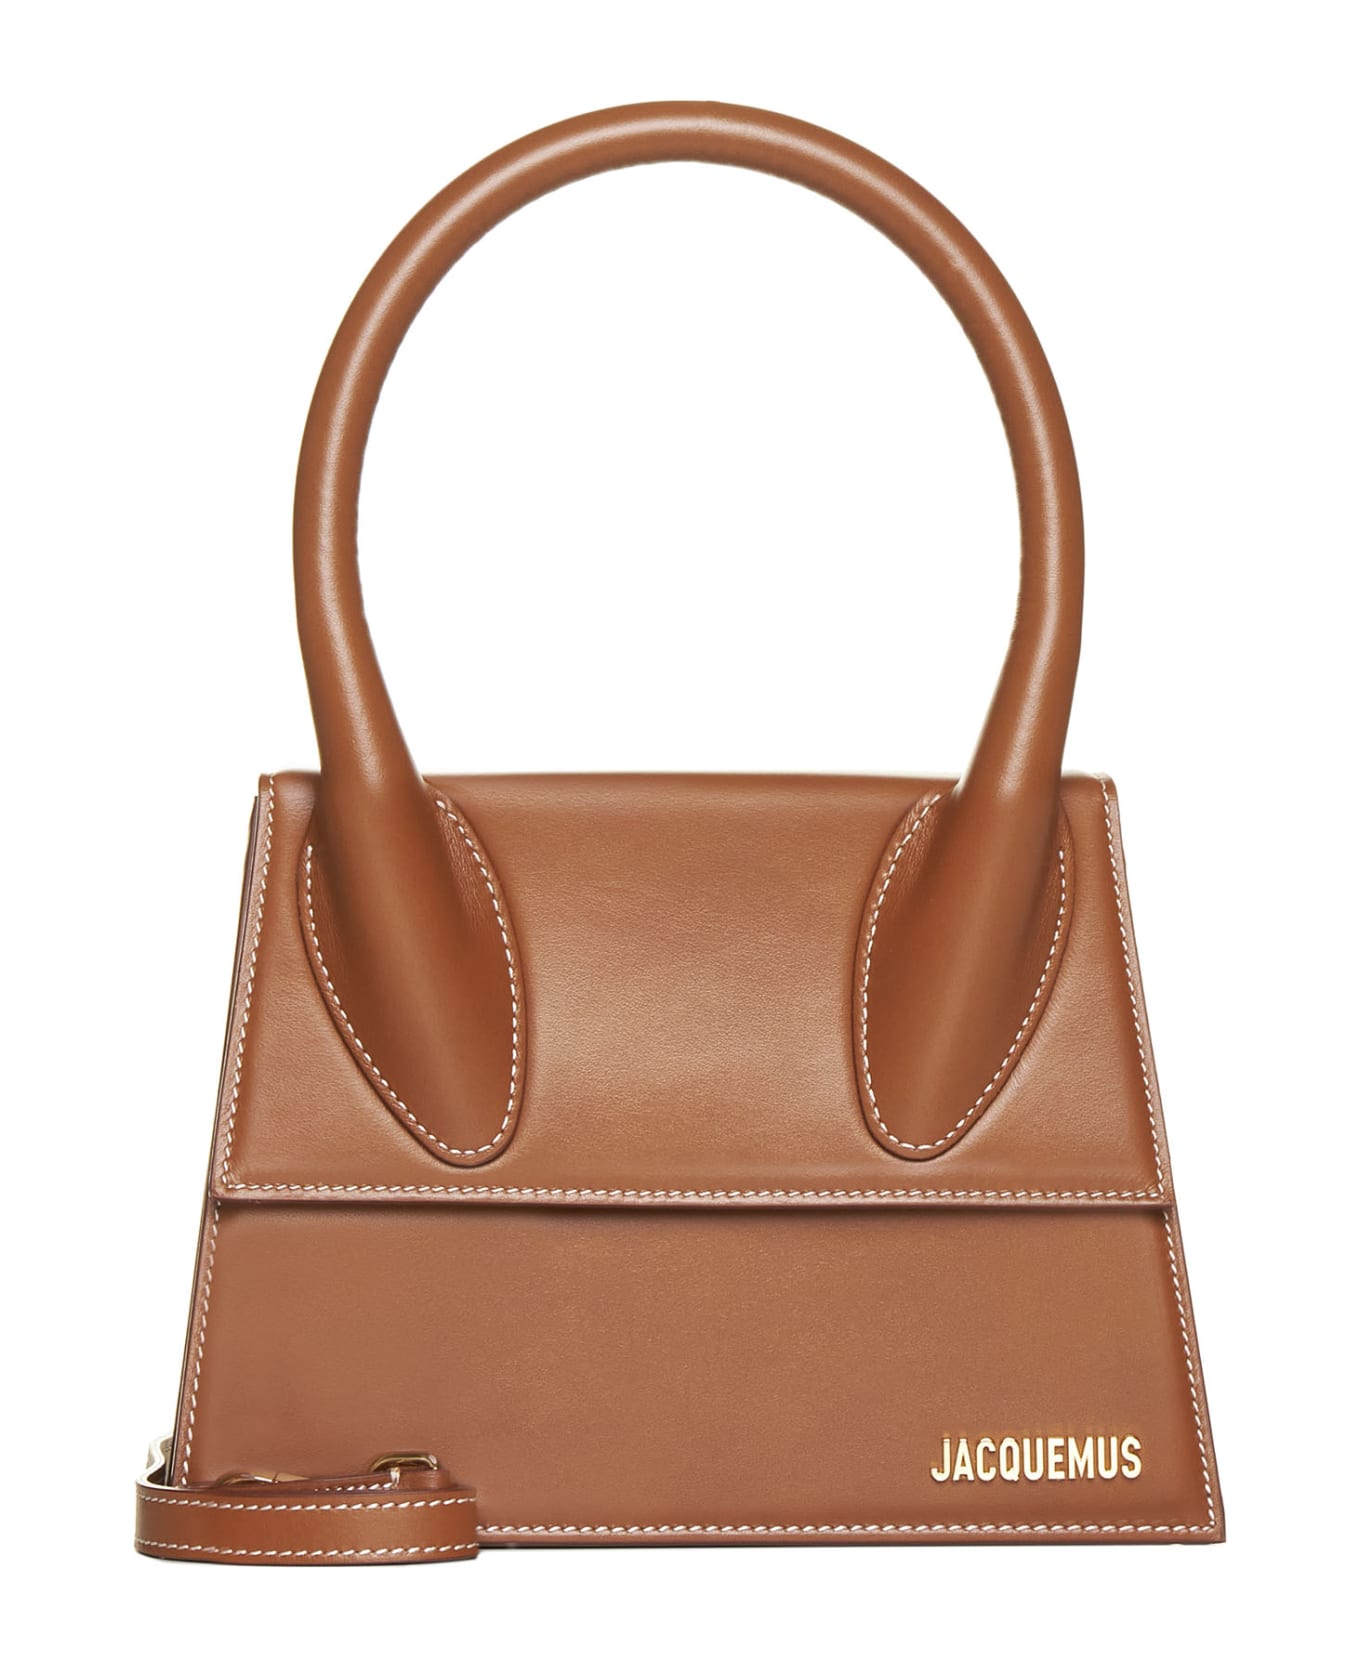 Jacquemus Le Grand Chiquito Handbag - Light brown